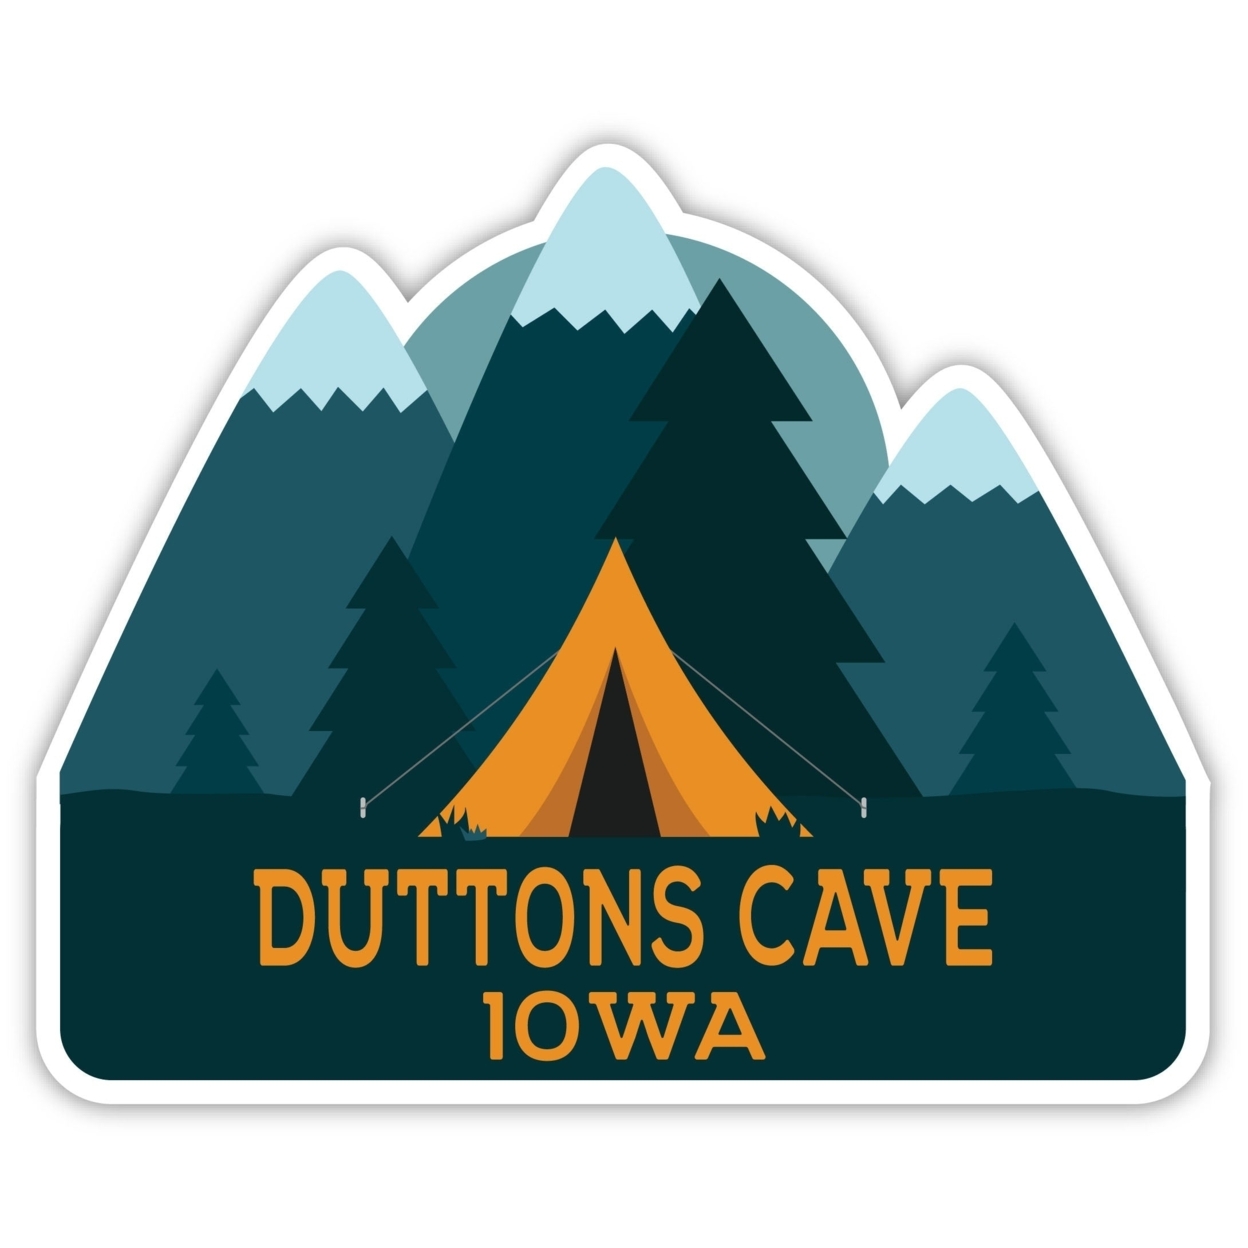 Duttons Cave Iowa Souvenir Decorative Stickers (Choose Theme And Size) - 4-Pack, 12-Inch, Tent